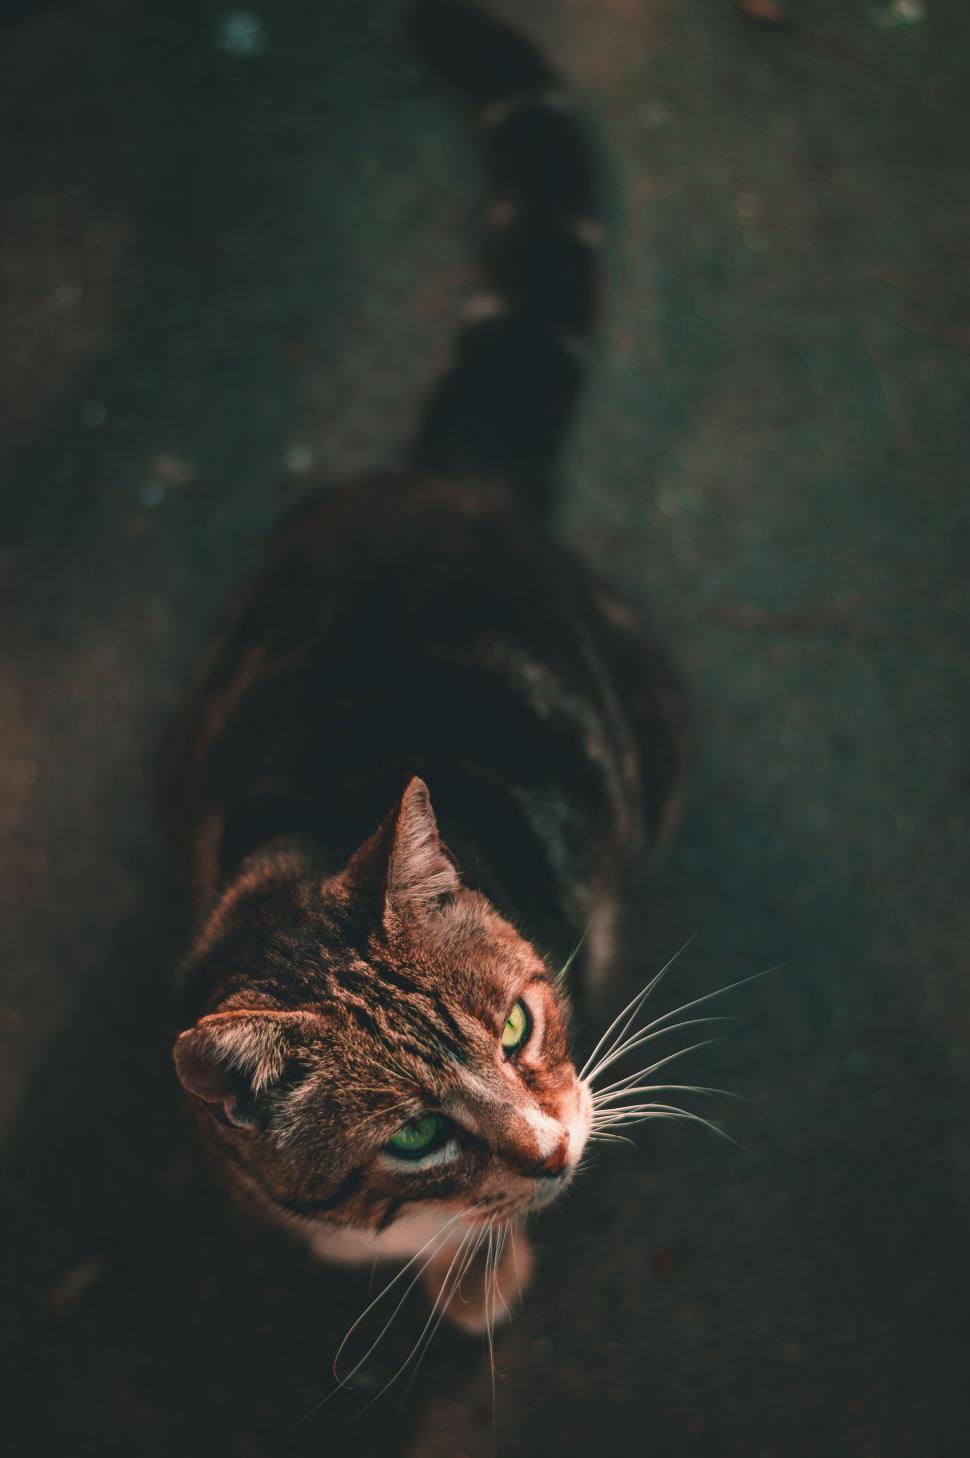 Free Image of Domestic cat gazing upwards with intense eyes 